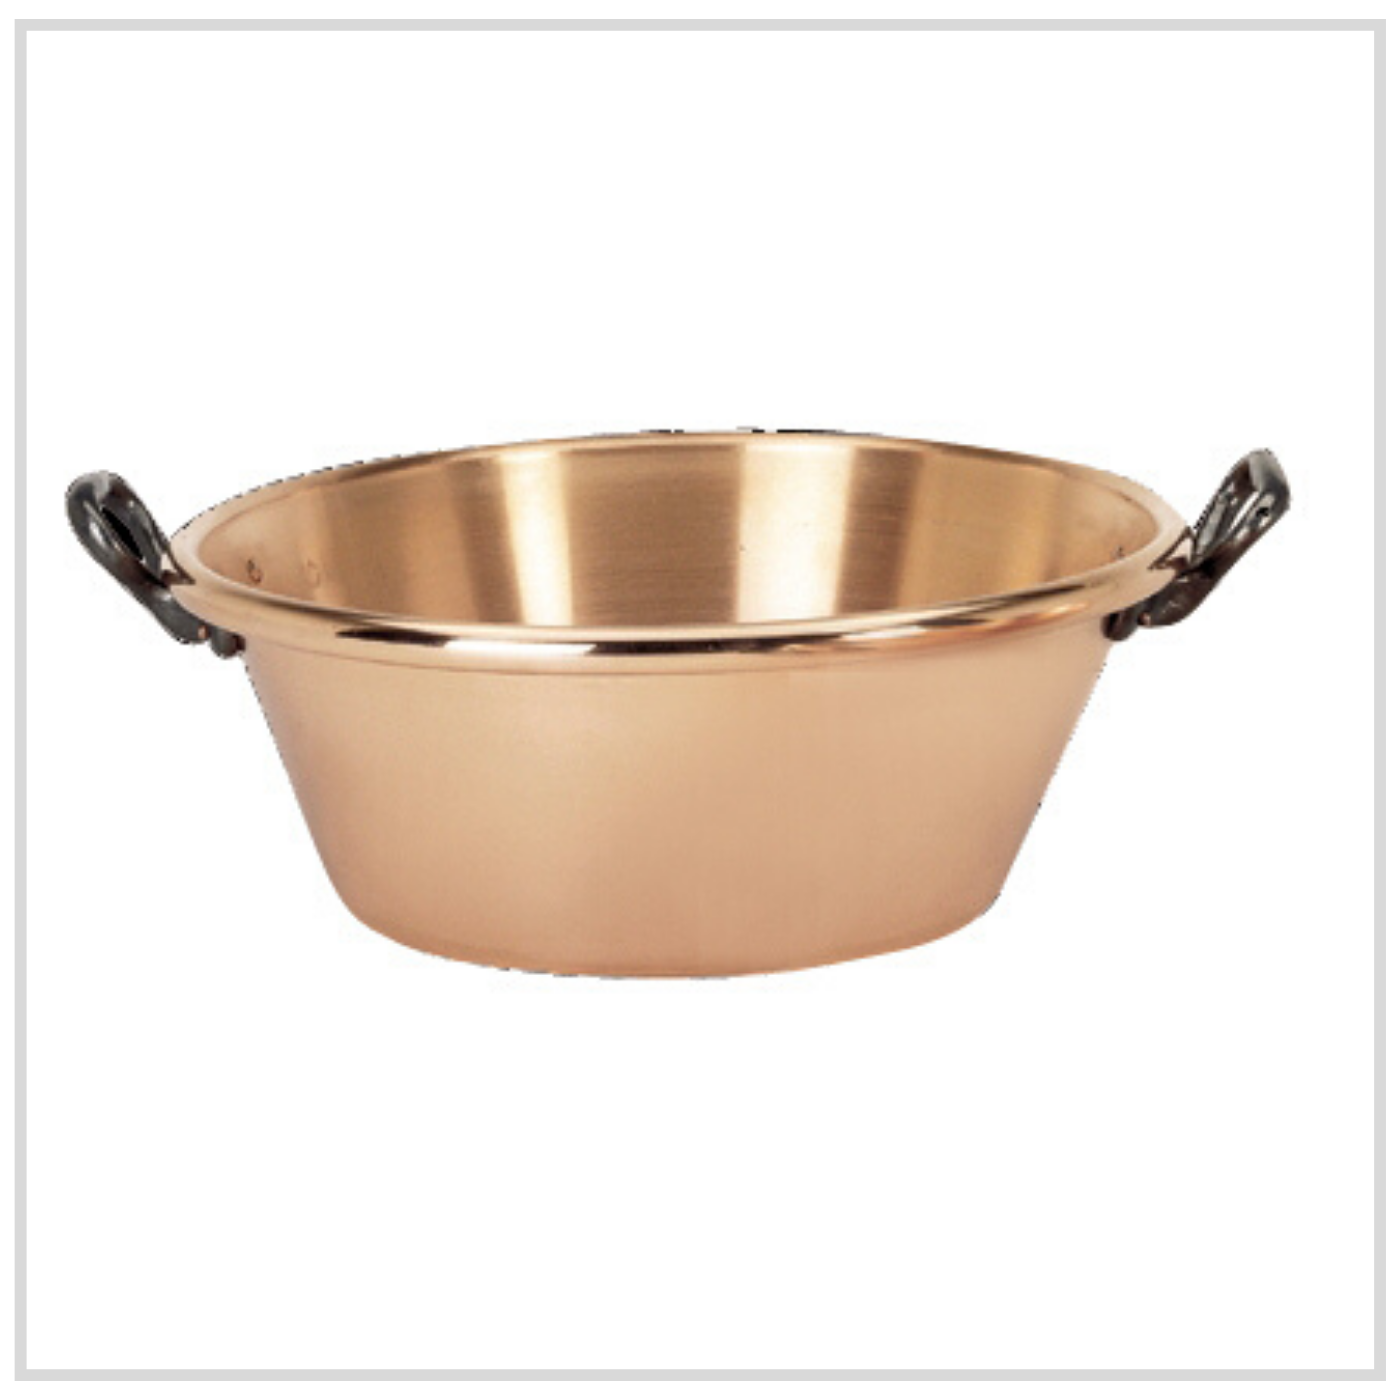 De Buyer Copper Preserving Pan with Cast Iron Handles 9Litres - 38cm